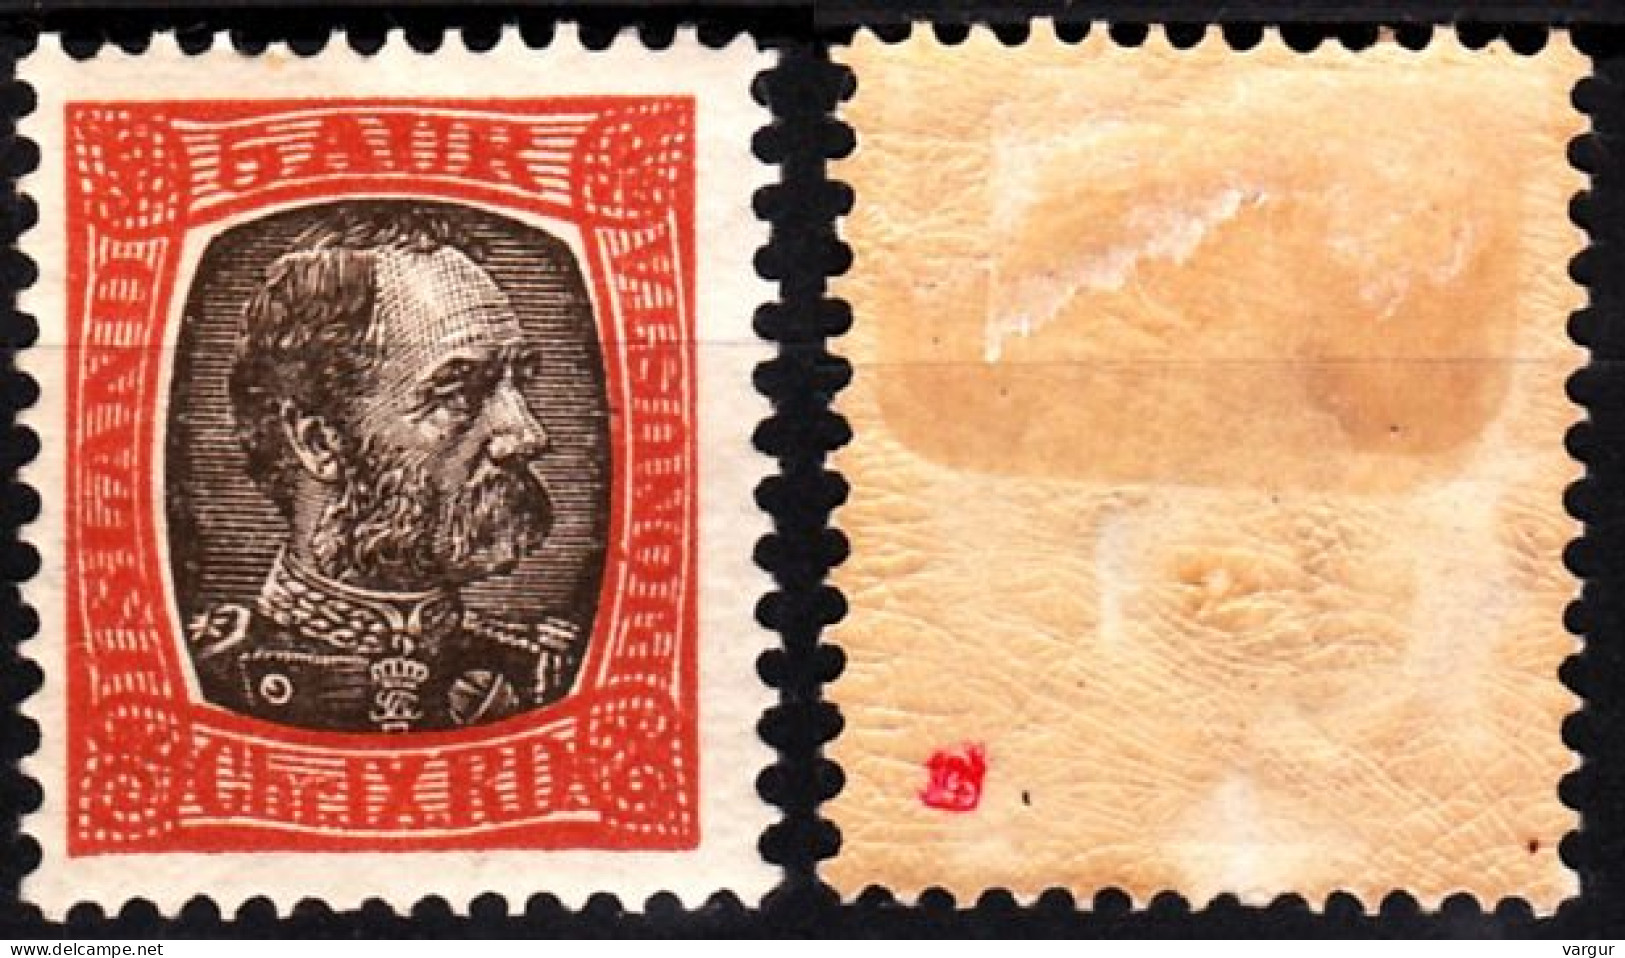 ICELAND / ISLAND Postage Due 1902 King Christian IX, 5Aur, MH Proved - Dienstzegels